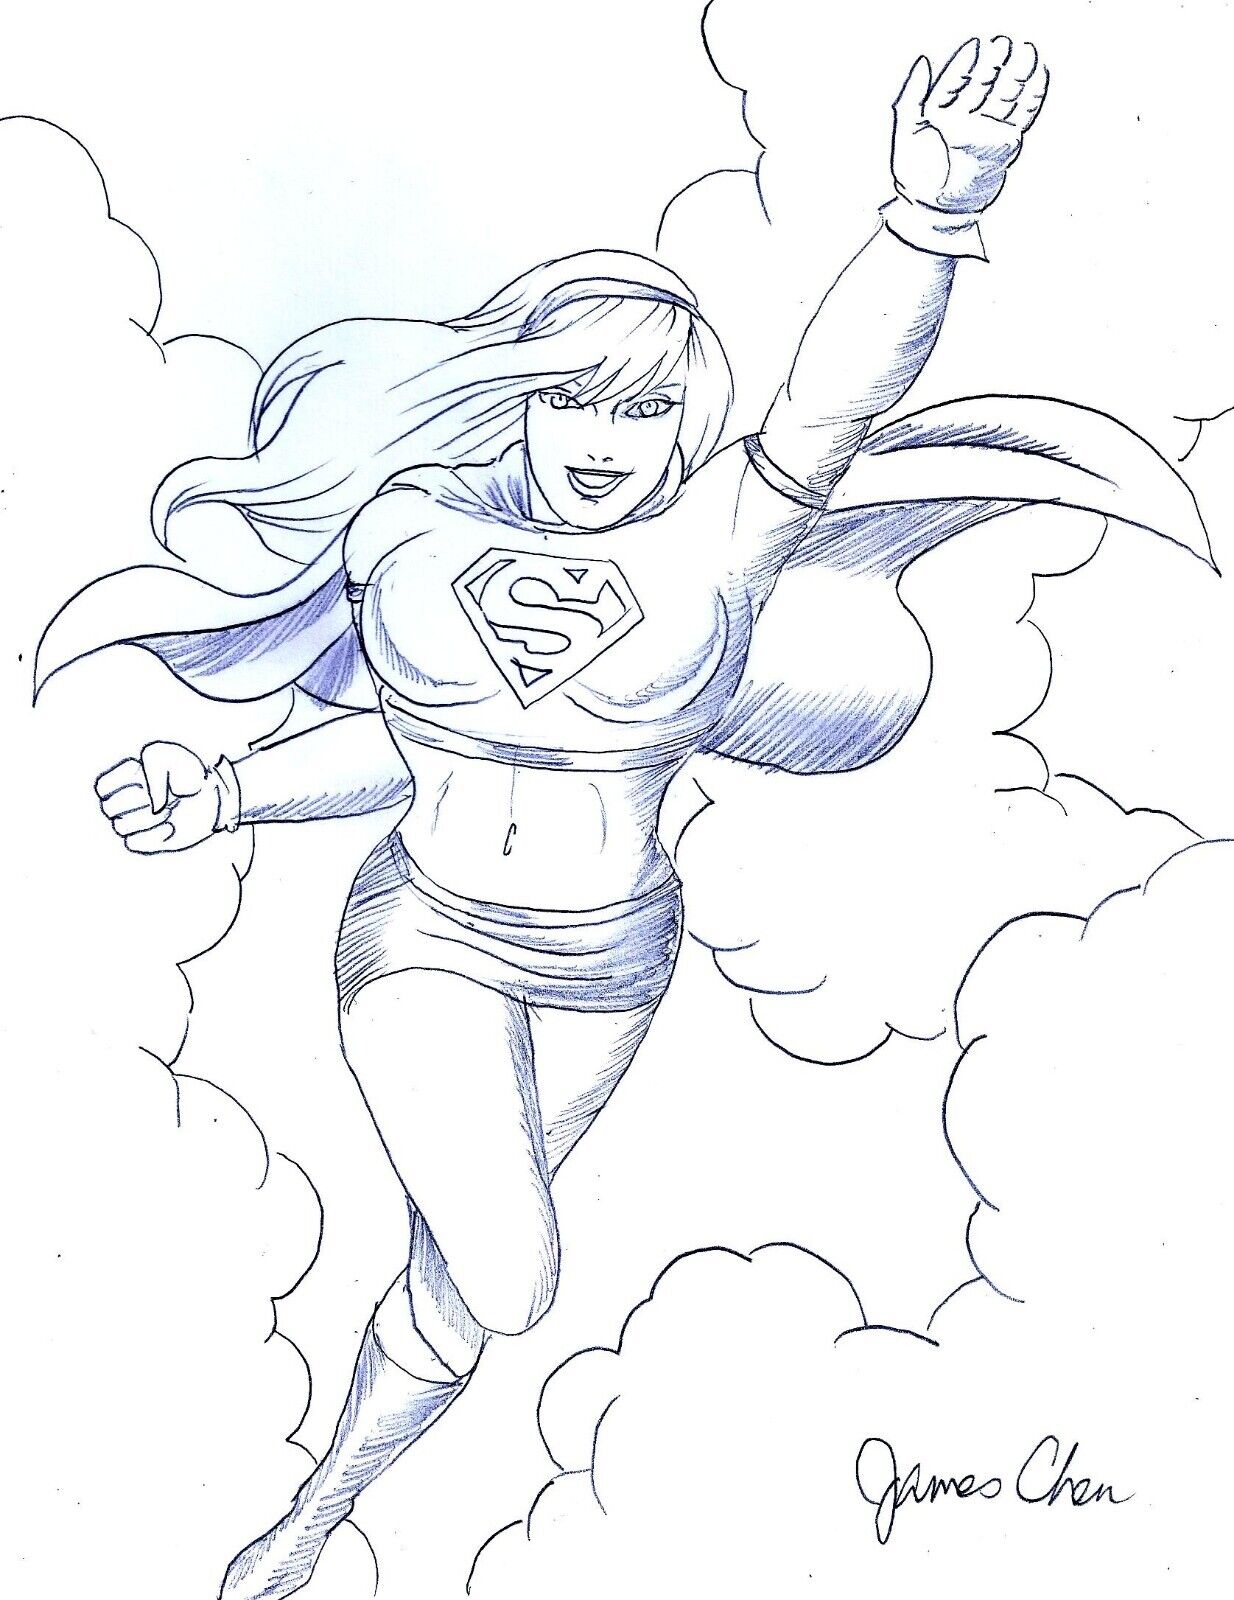 Supergirl original ic art pencil sketch on card stock